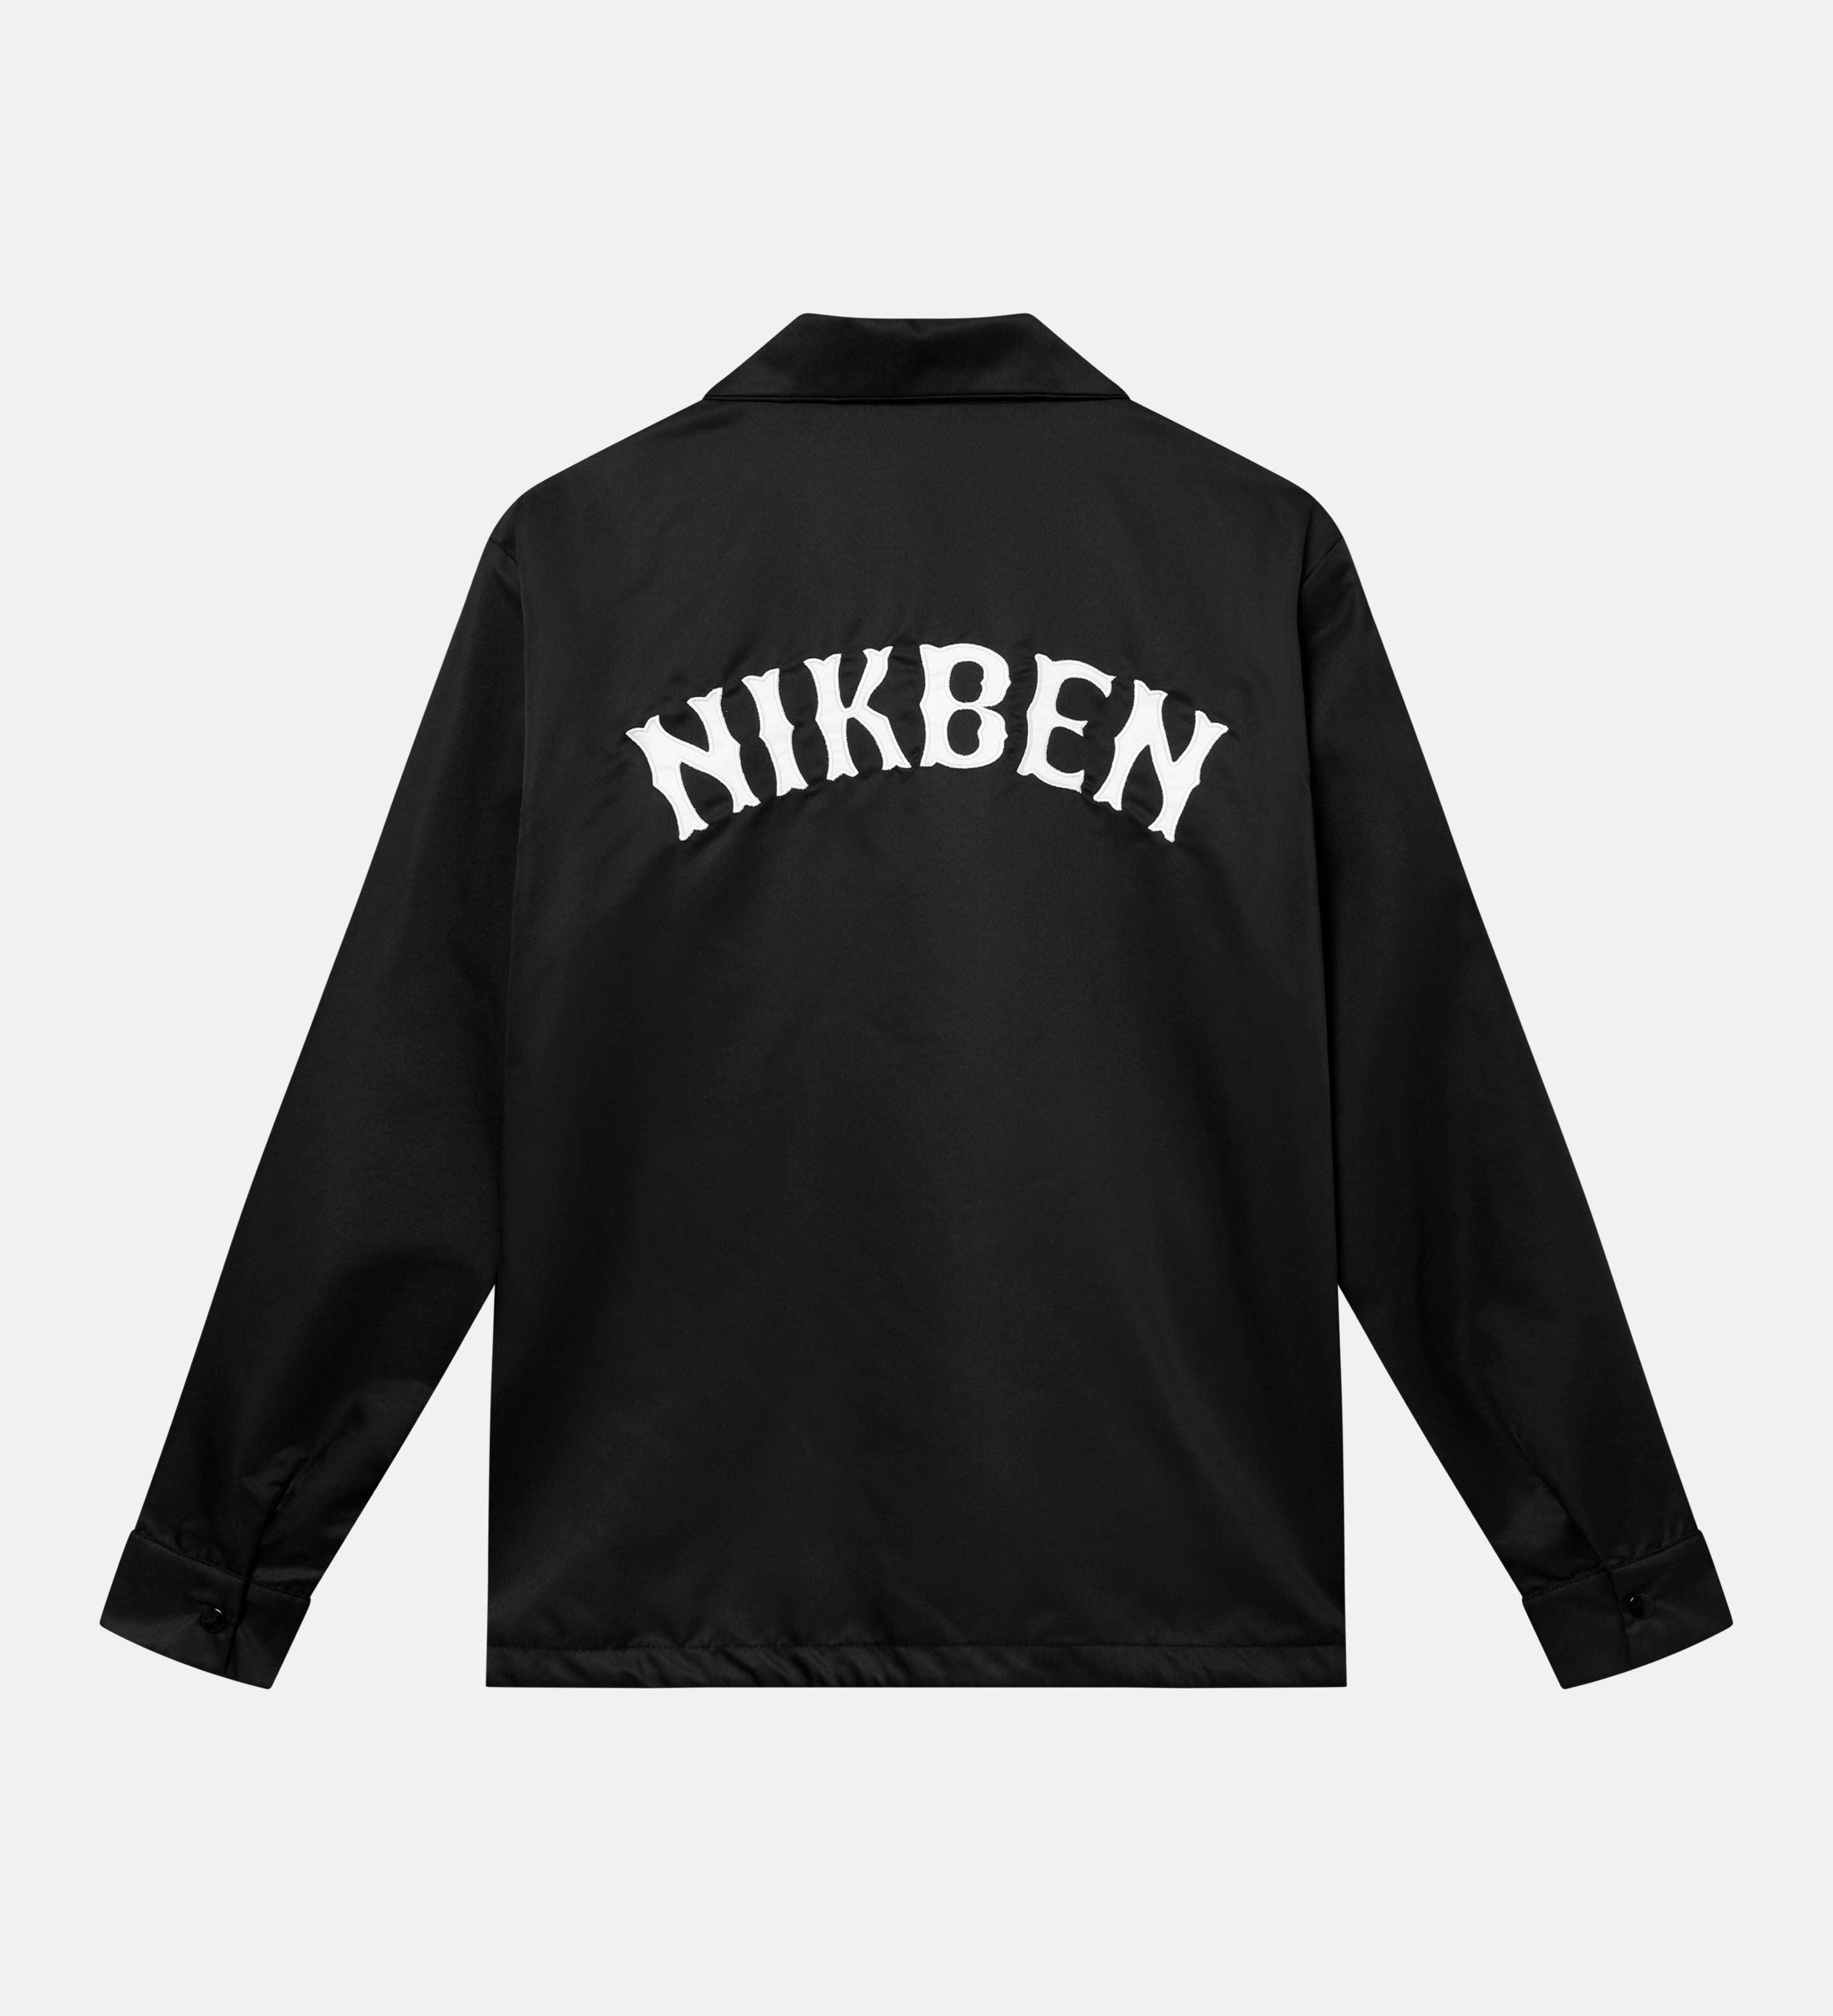 Black coach jacket with emboridered "Nikben" logo on the back